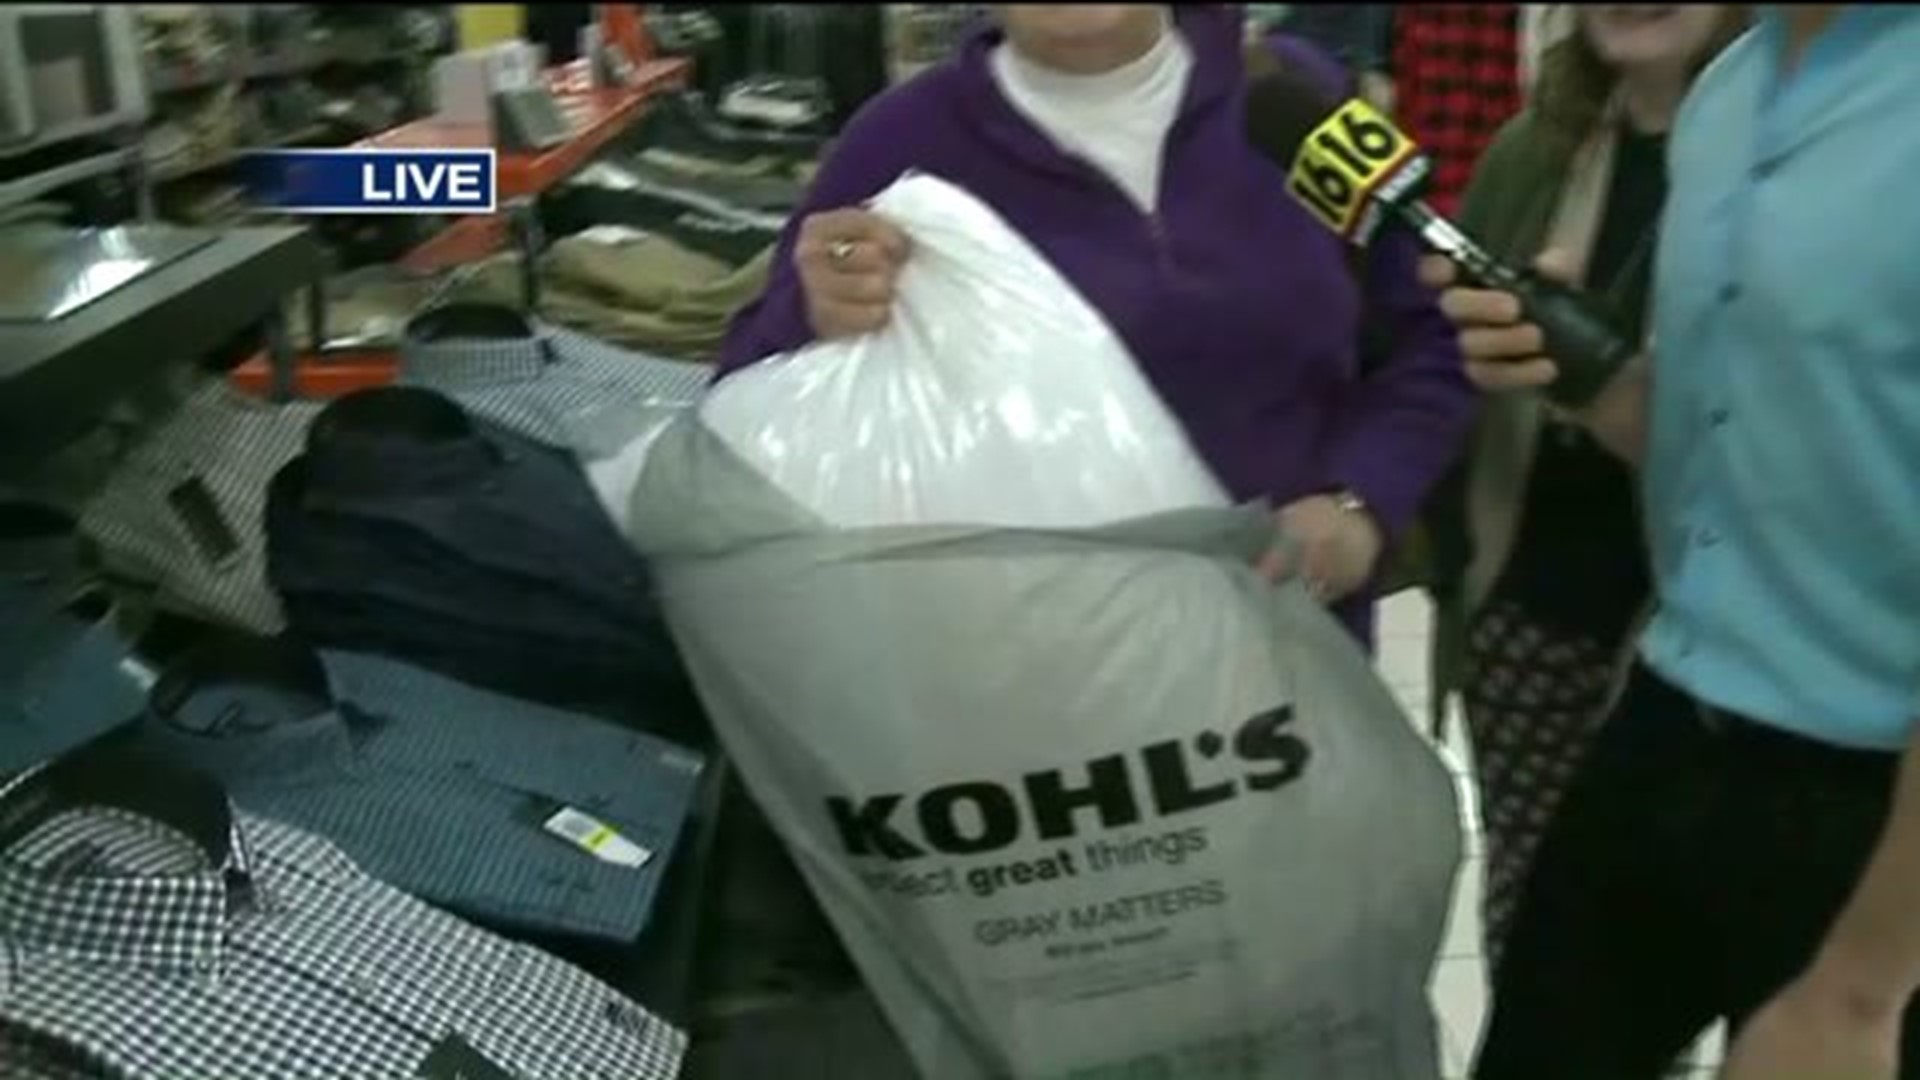 Black Friday Deals: Kohl's